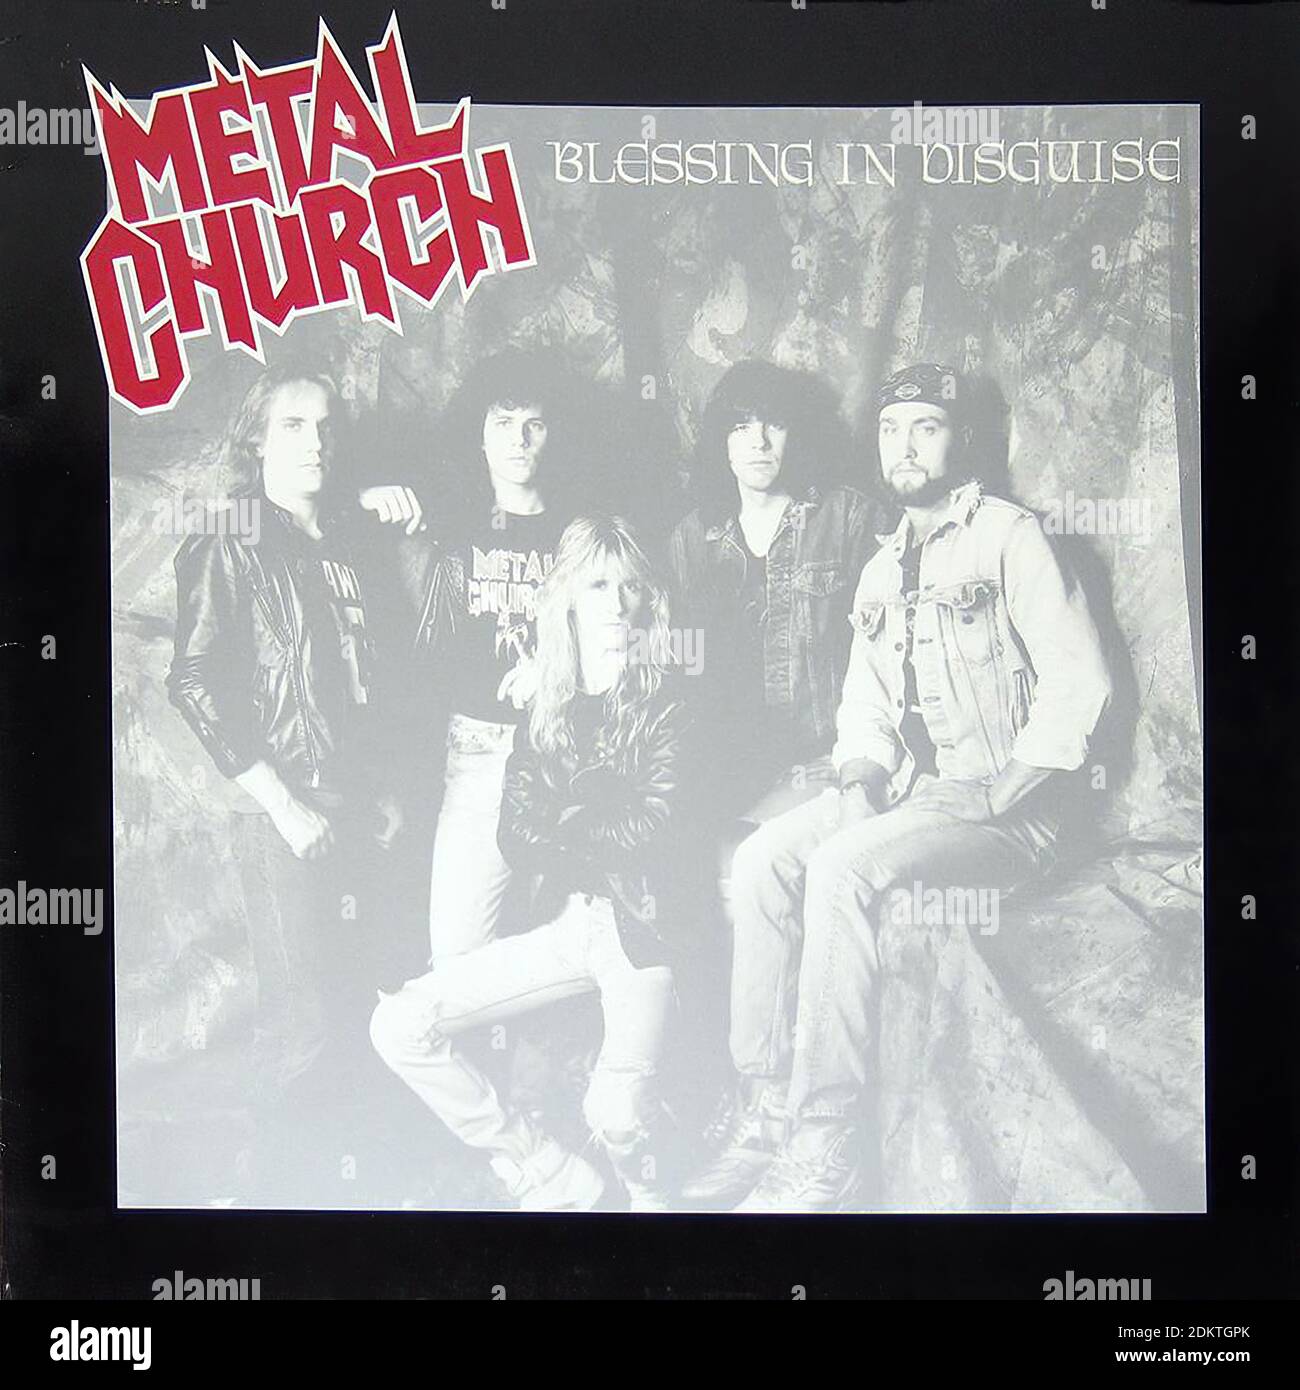 METAL CHURCH BLESSING IN DISGUISE LYRICS SHEET 12  LP - Vinyl-Schallplattencover Im Vintage-Stil Stockfoto